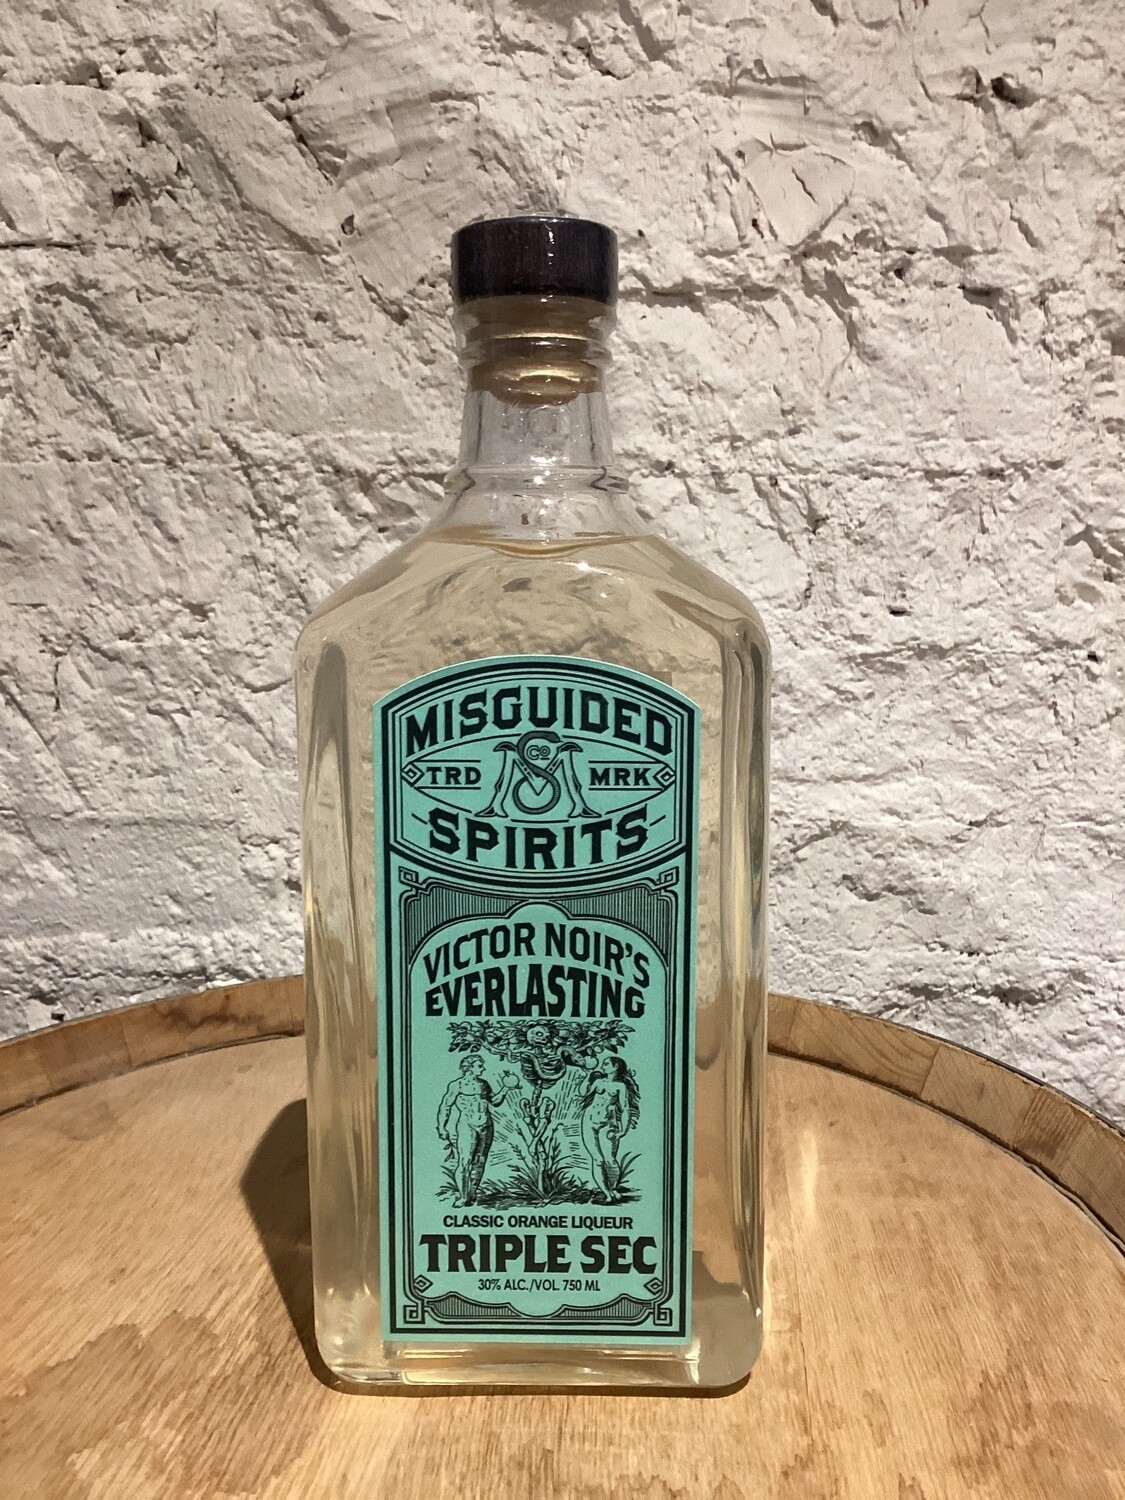 Misguided Spirits Victor Noir's Everlasting Triple Sec Classic Orange Liqueur (750ml), Size: 750ml